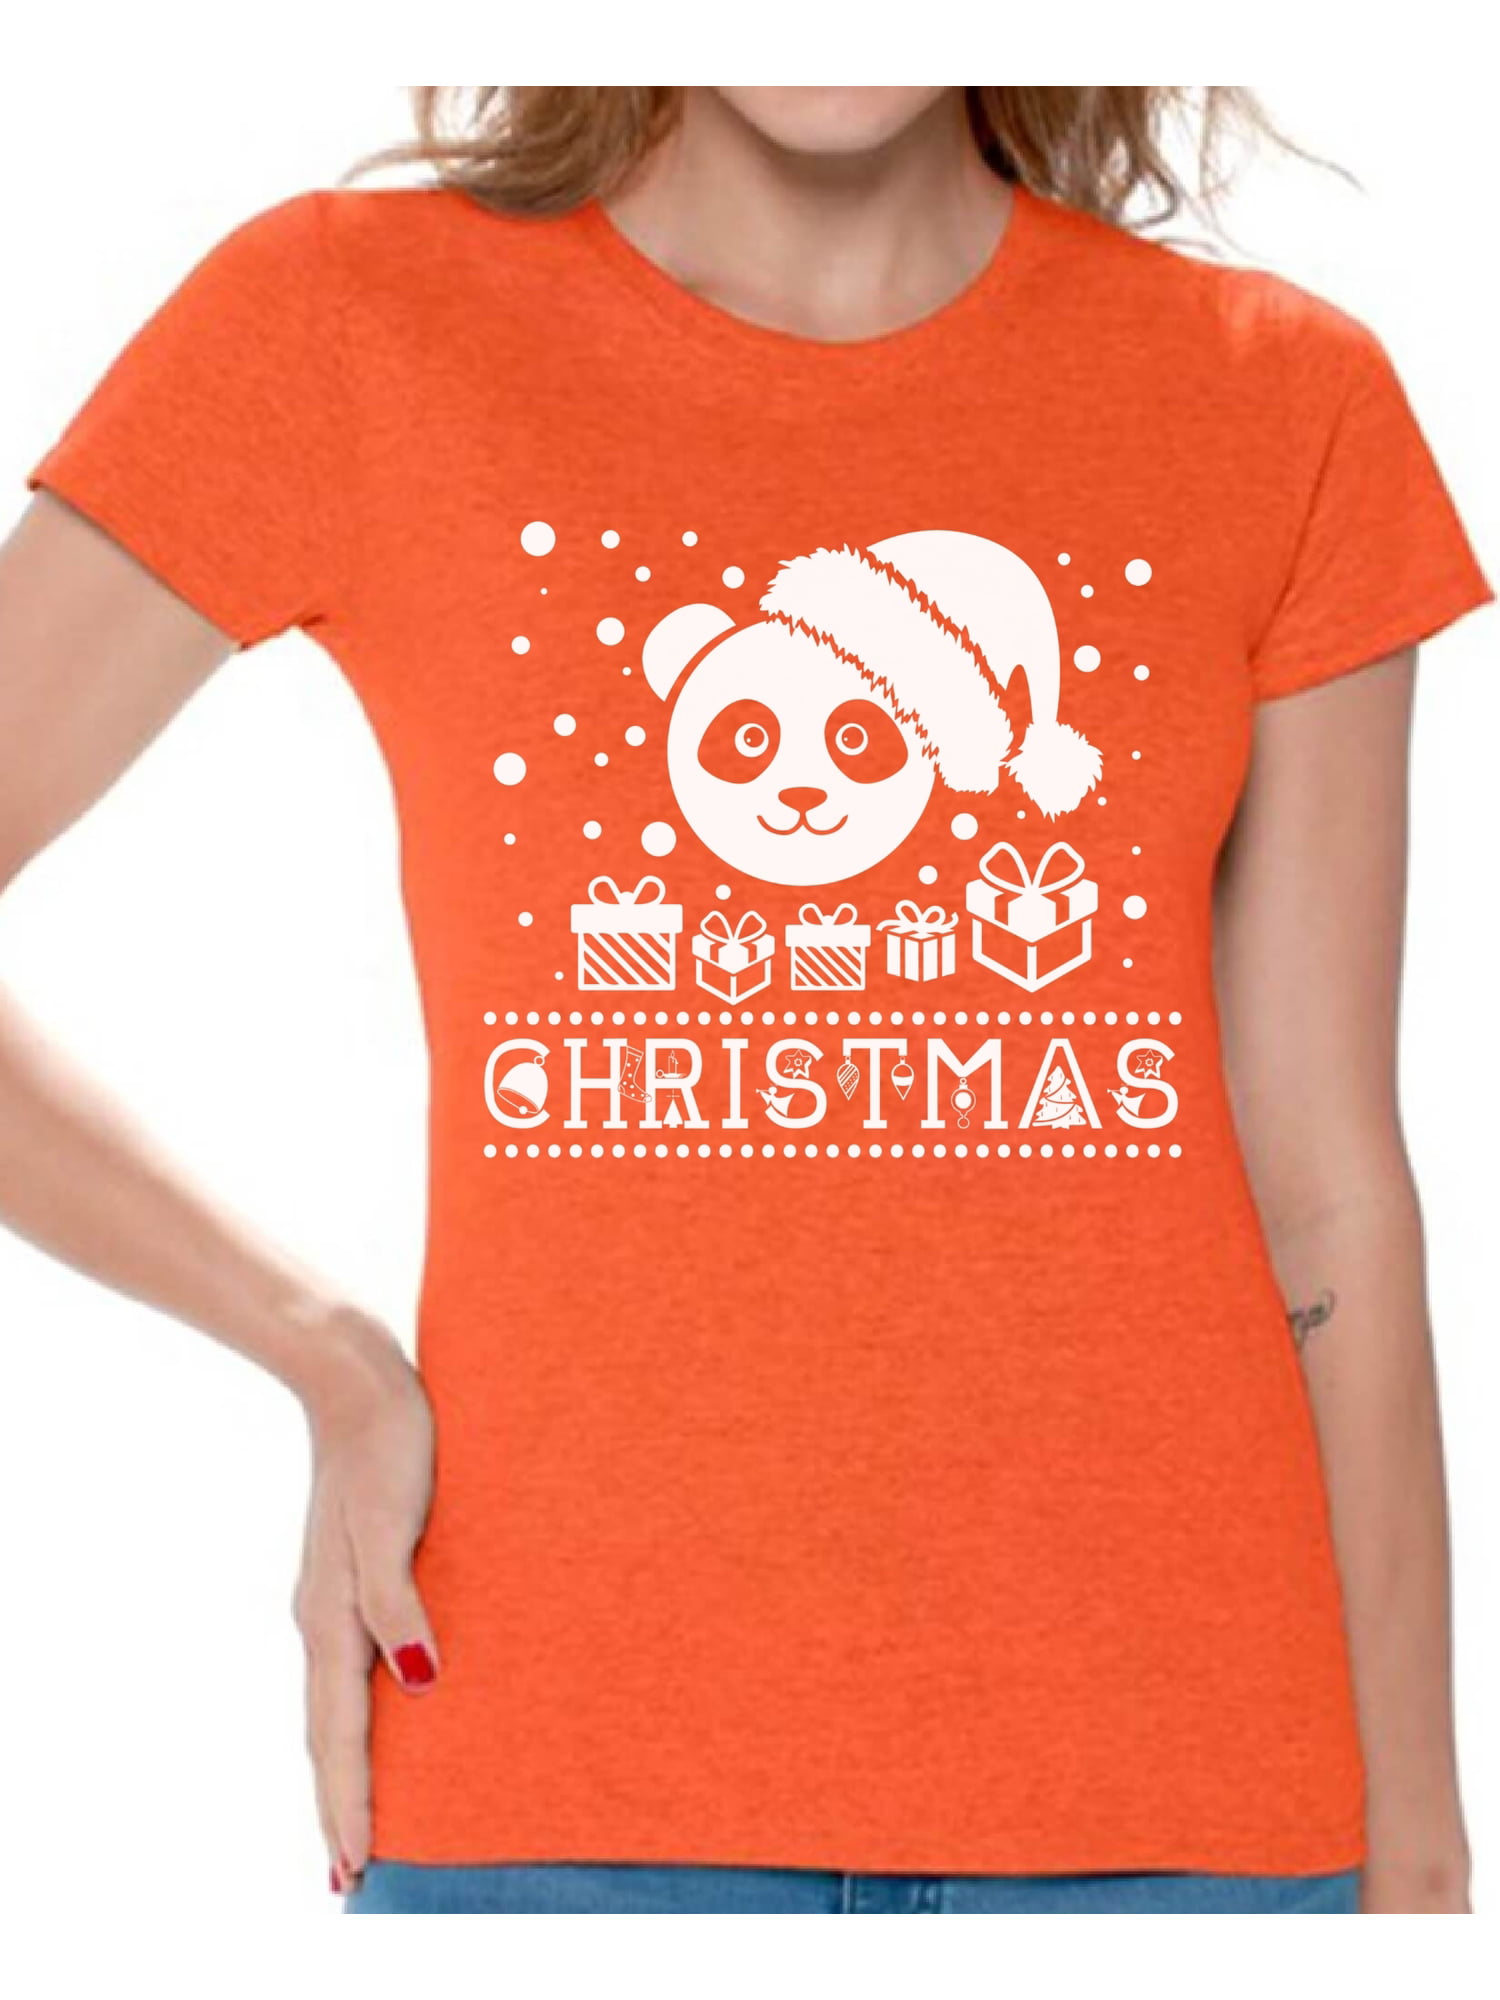 Youth Toddler Angry Snowman Shirt Christmas Present Gift X-mas T-Shirt Boy Girl 